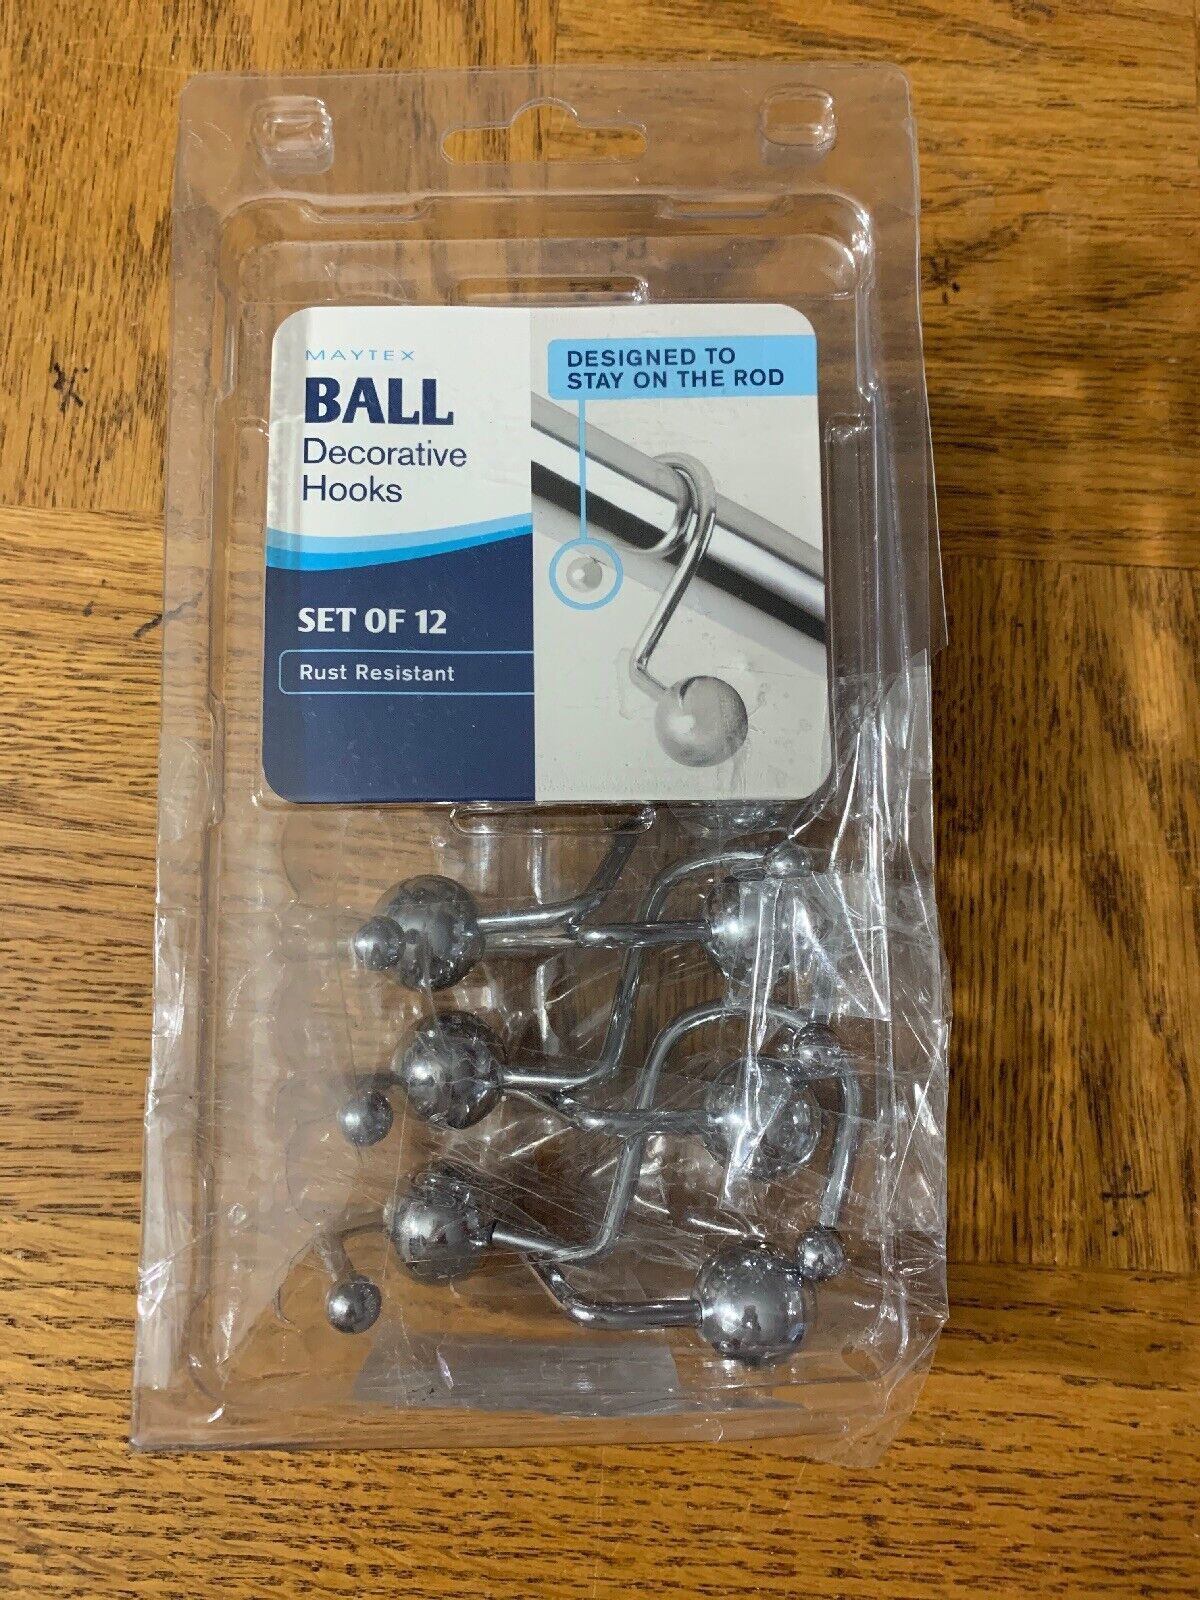 Maytex Ball Decorative Shower Hooks - $19.68